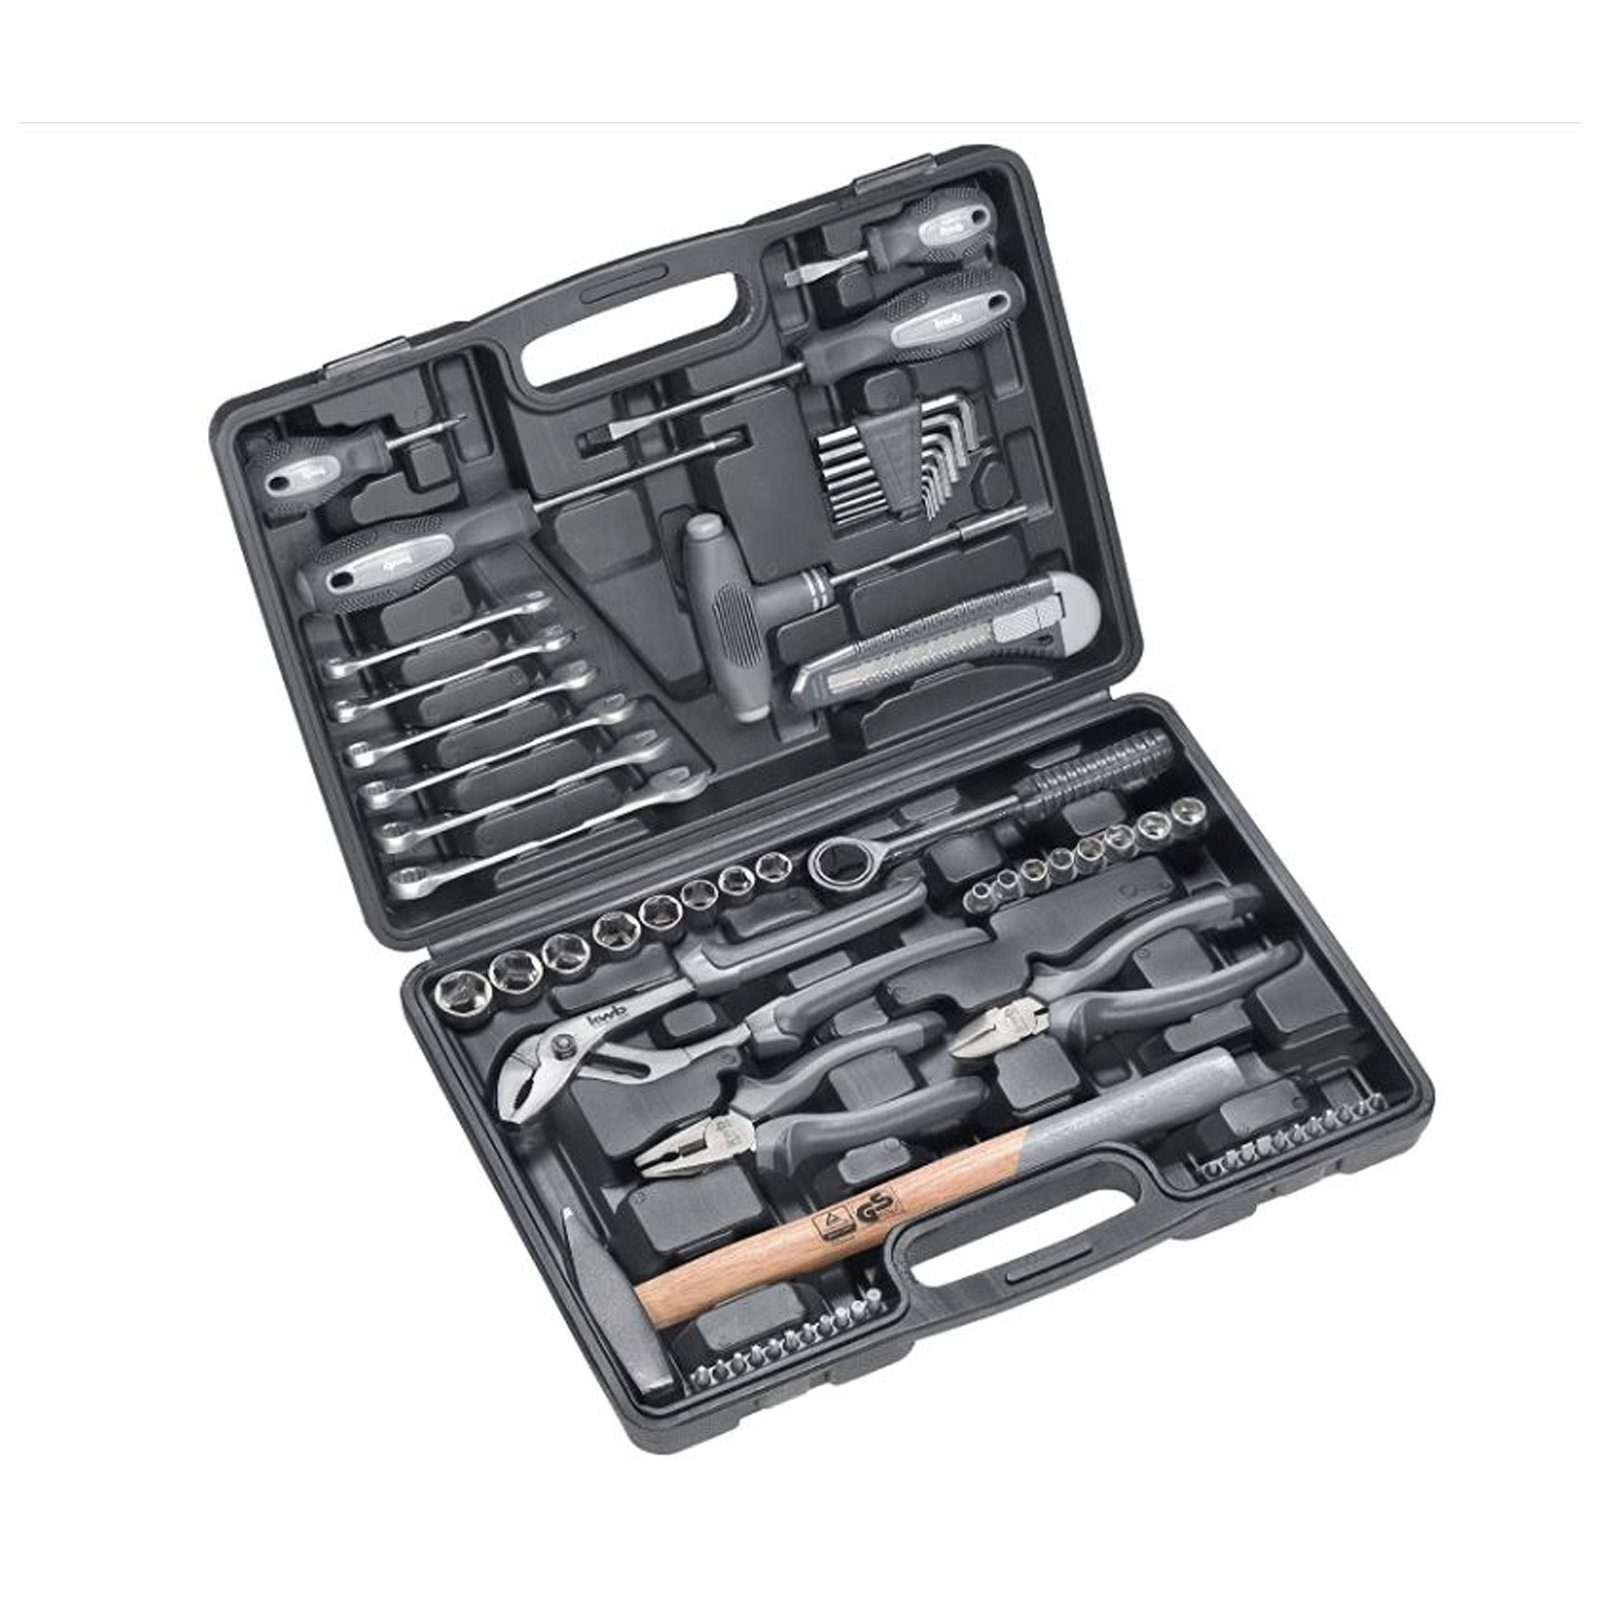 kwb Werkzeugset kwb Werkzeug-Koffer inkl. Werkzeug-Set, 63-teilig, gefüllt,  robust, Inklusive 22 tlg. Bit-Set aus qualitativ hochwertigem